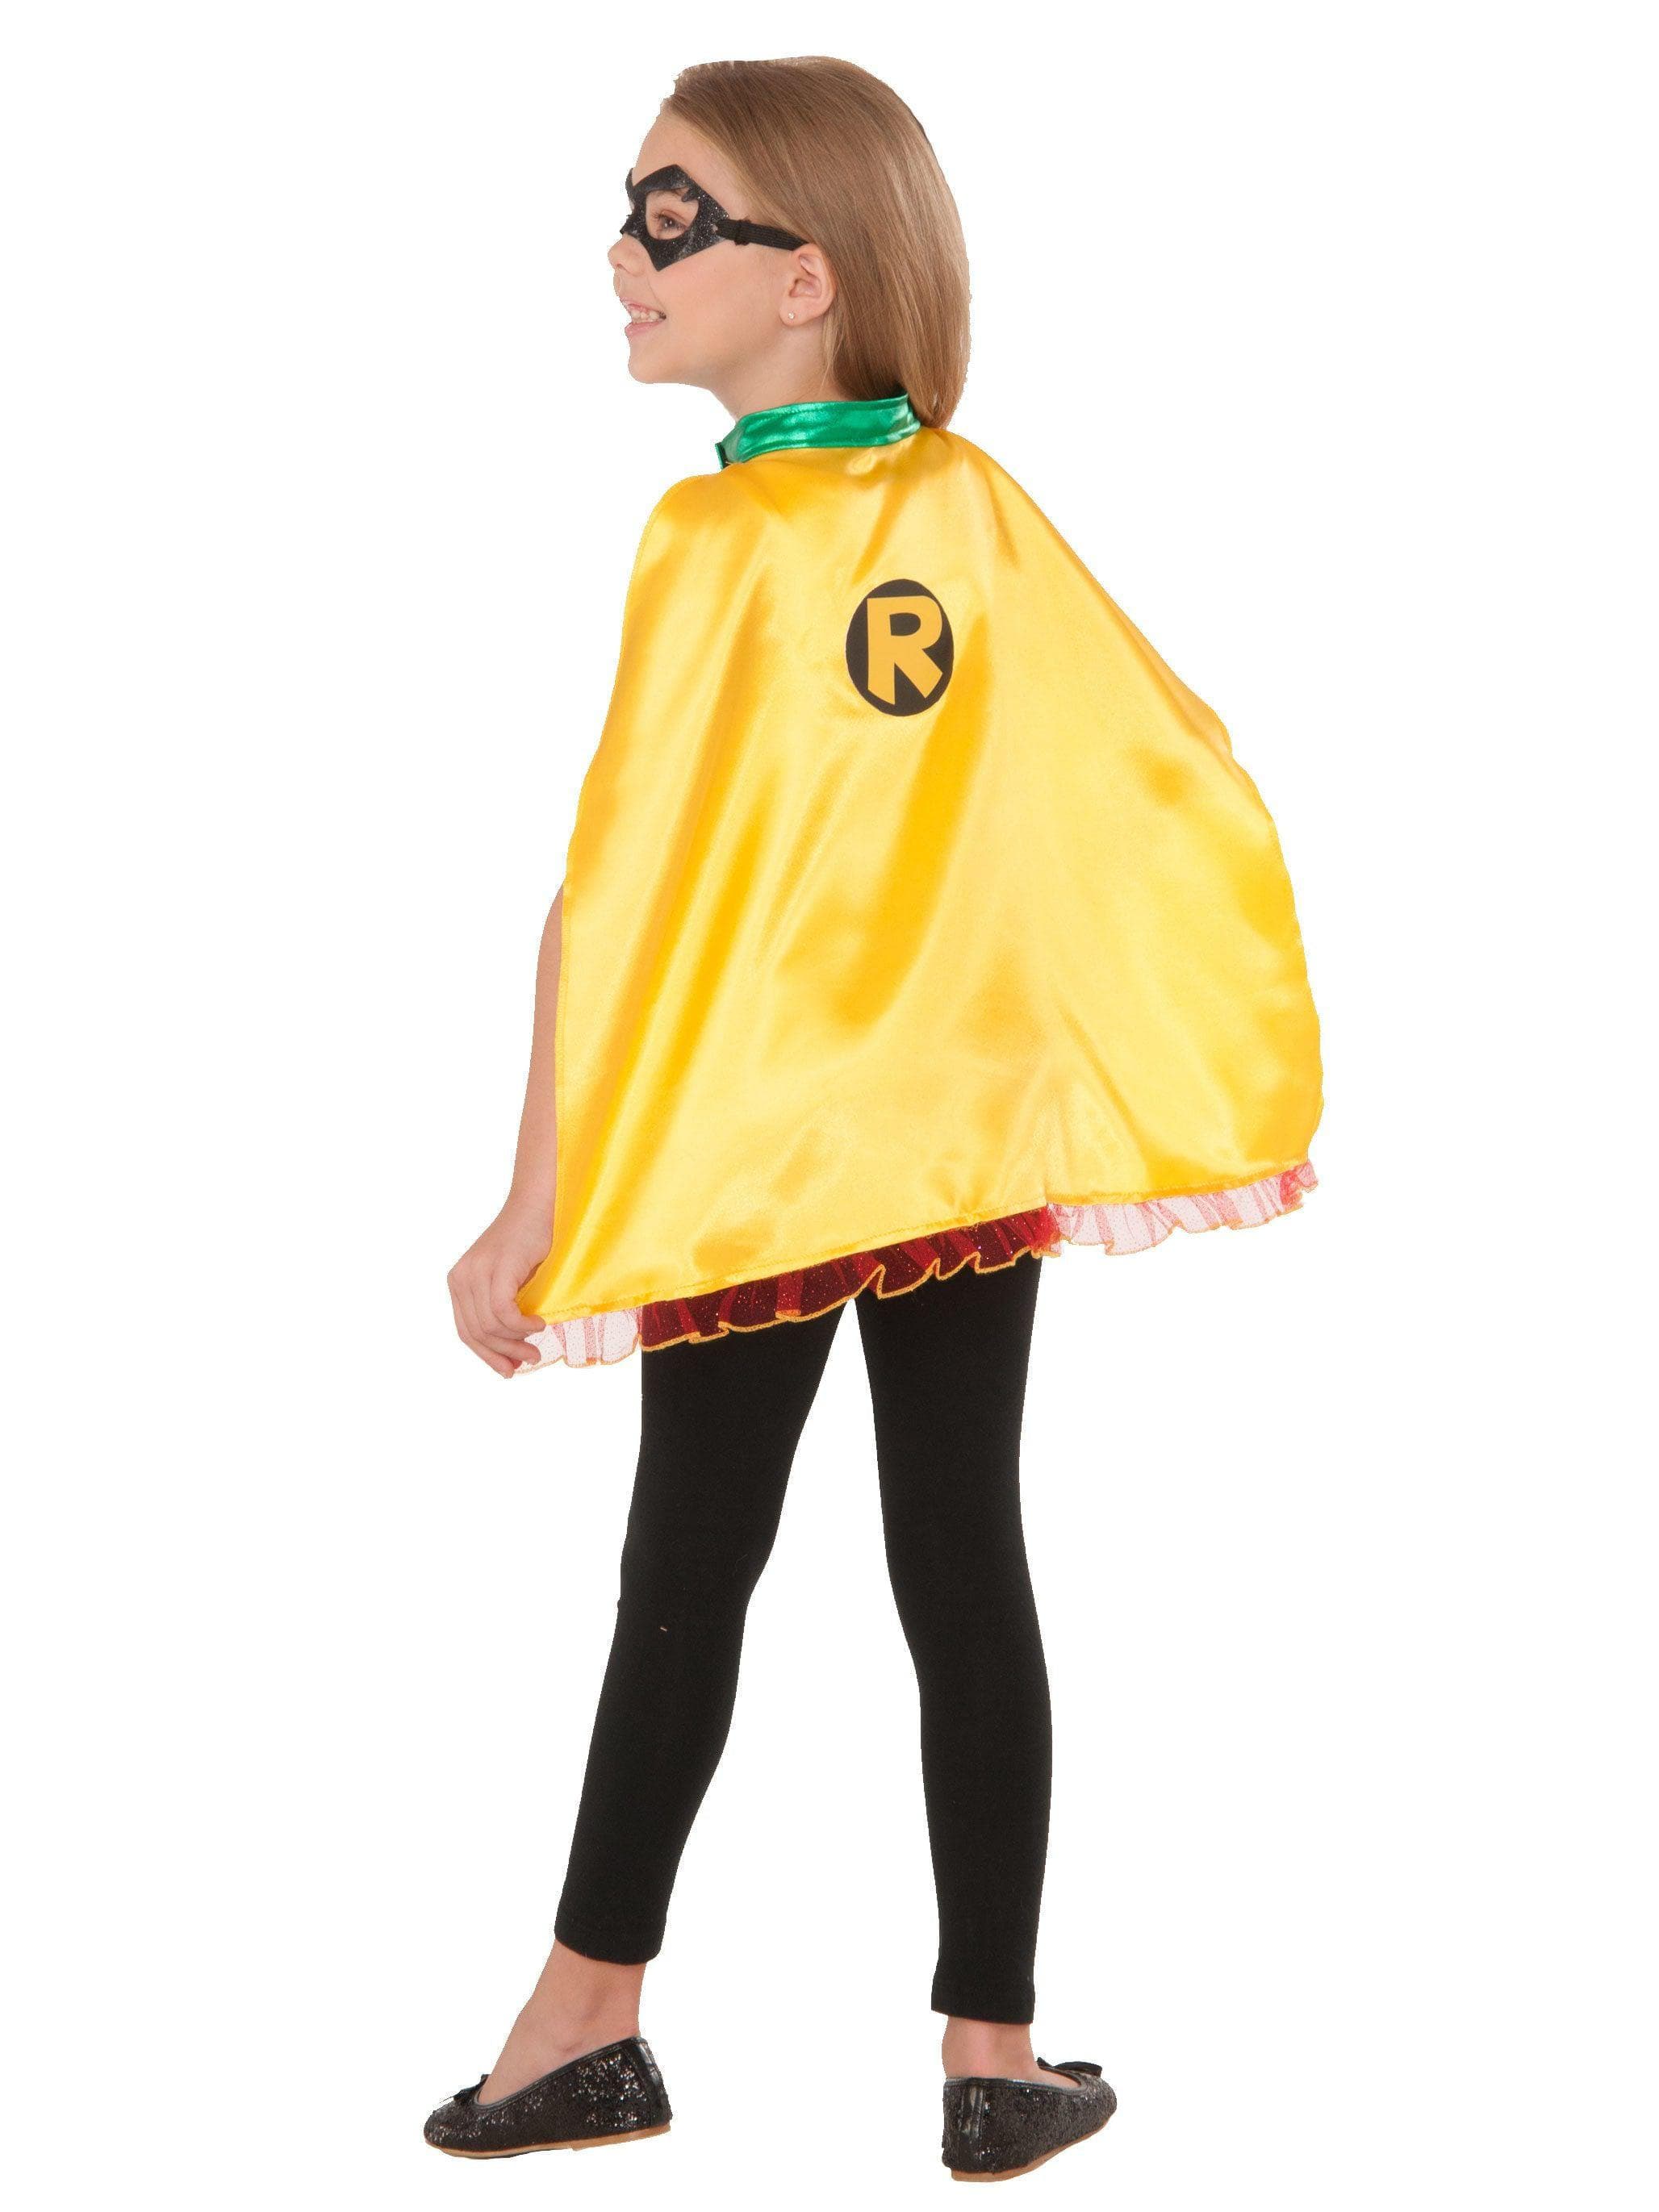 Kid's DC Comics Robin Costume - costumes.com